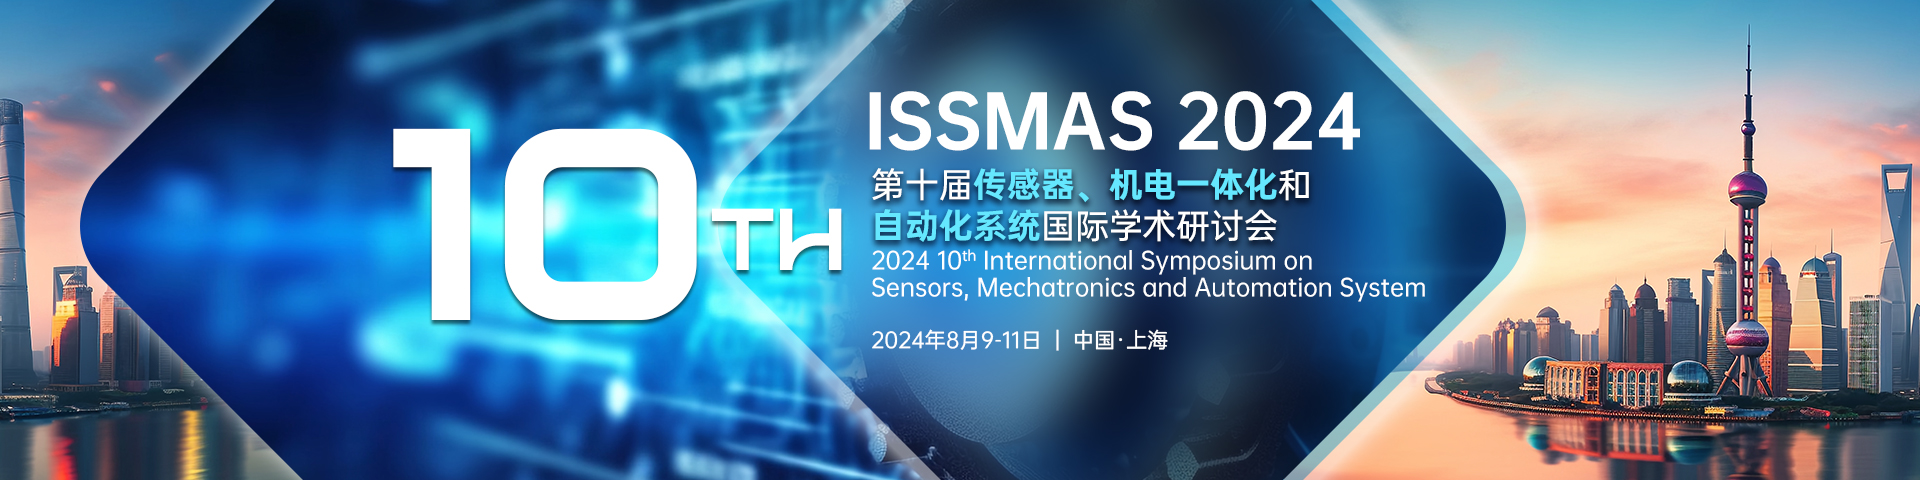 ISSMAS-1920x480-中文.jpg